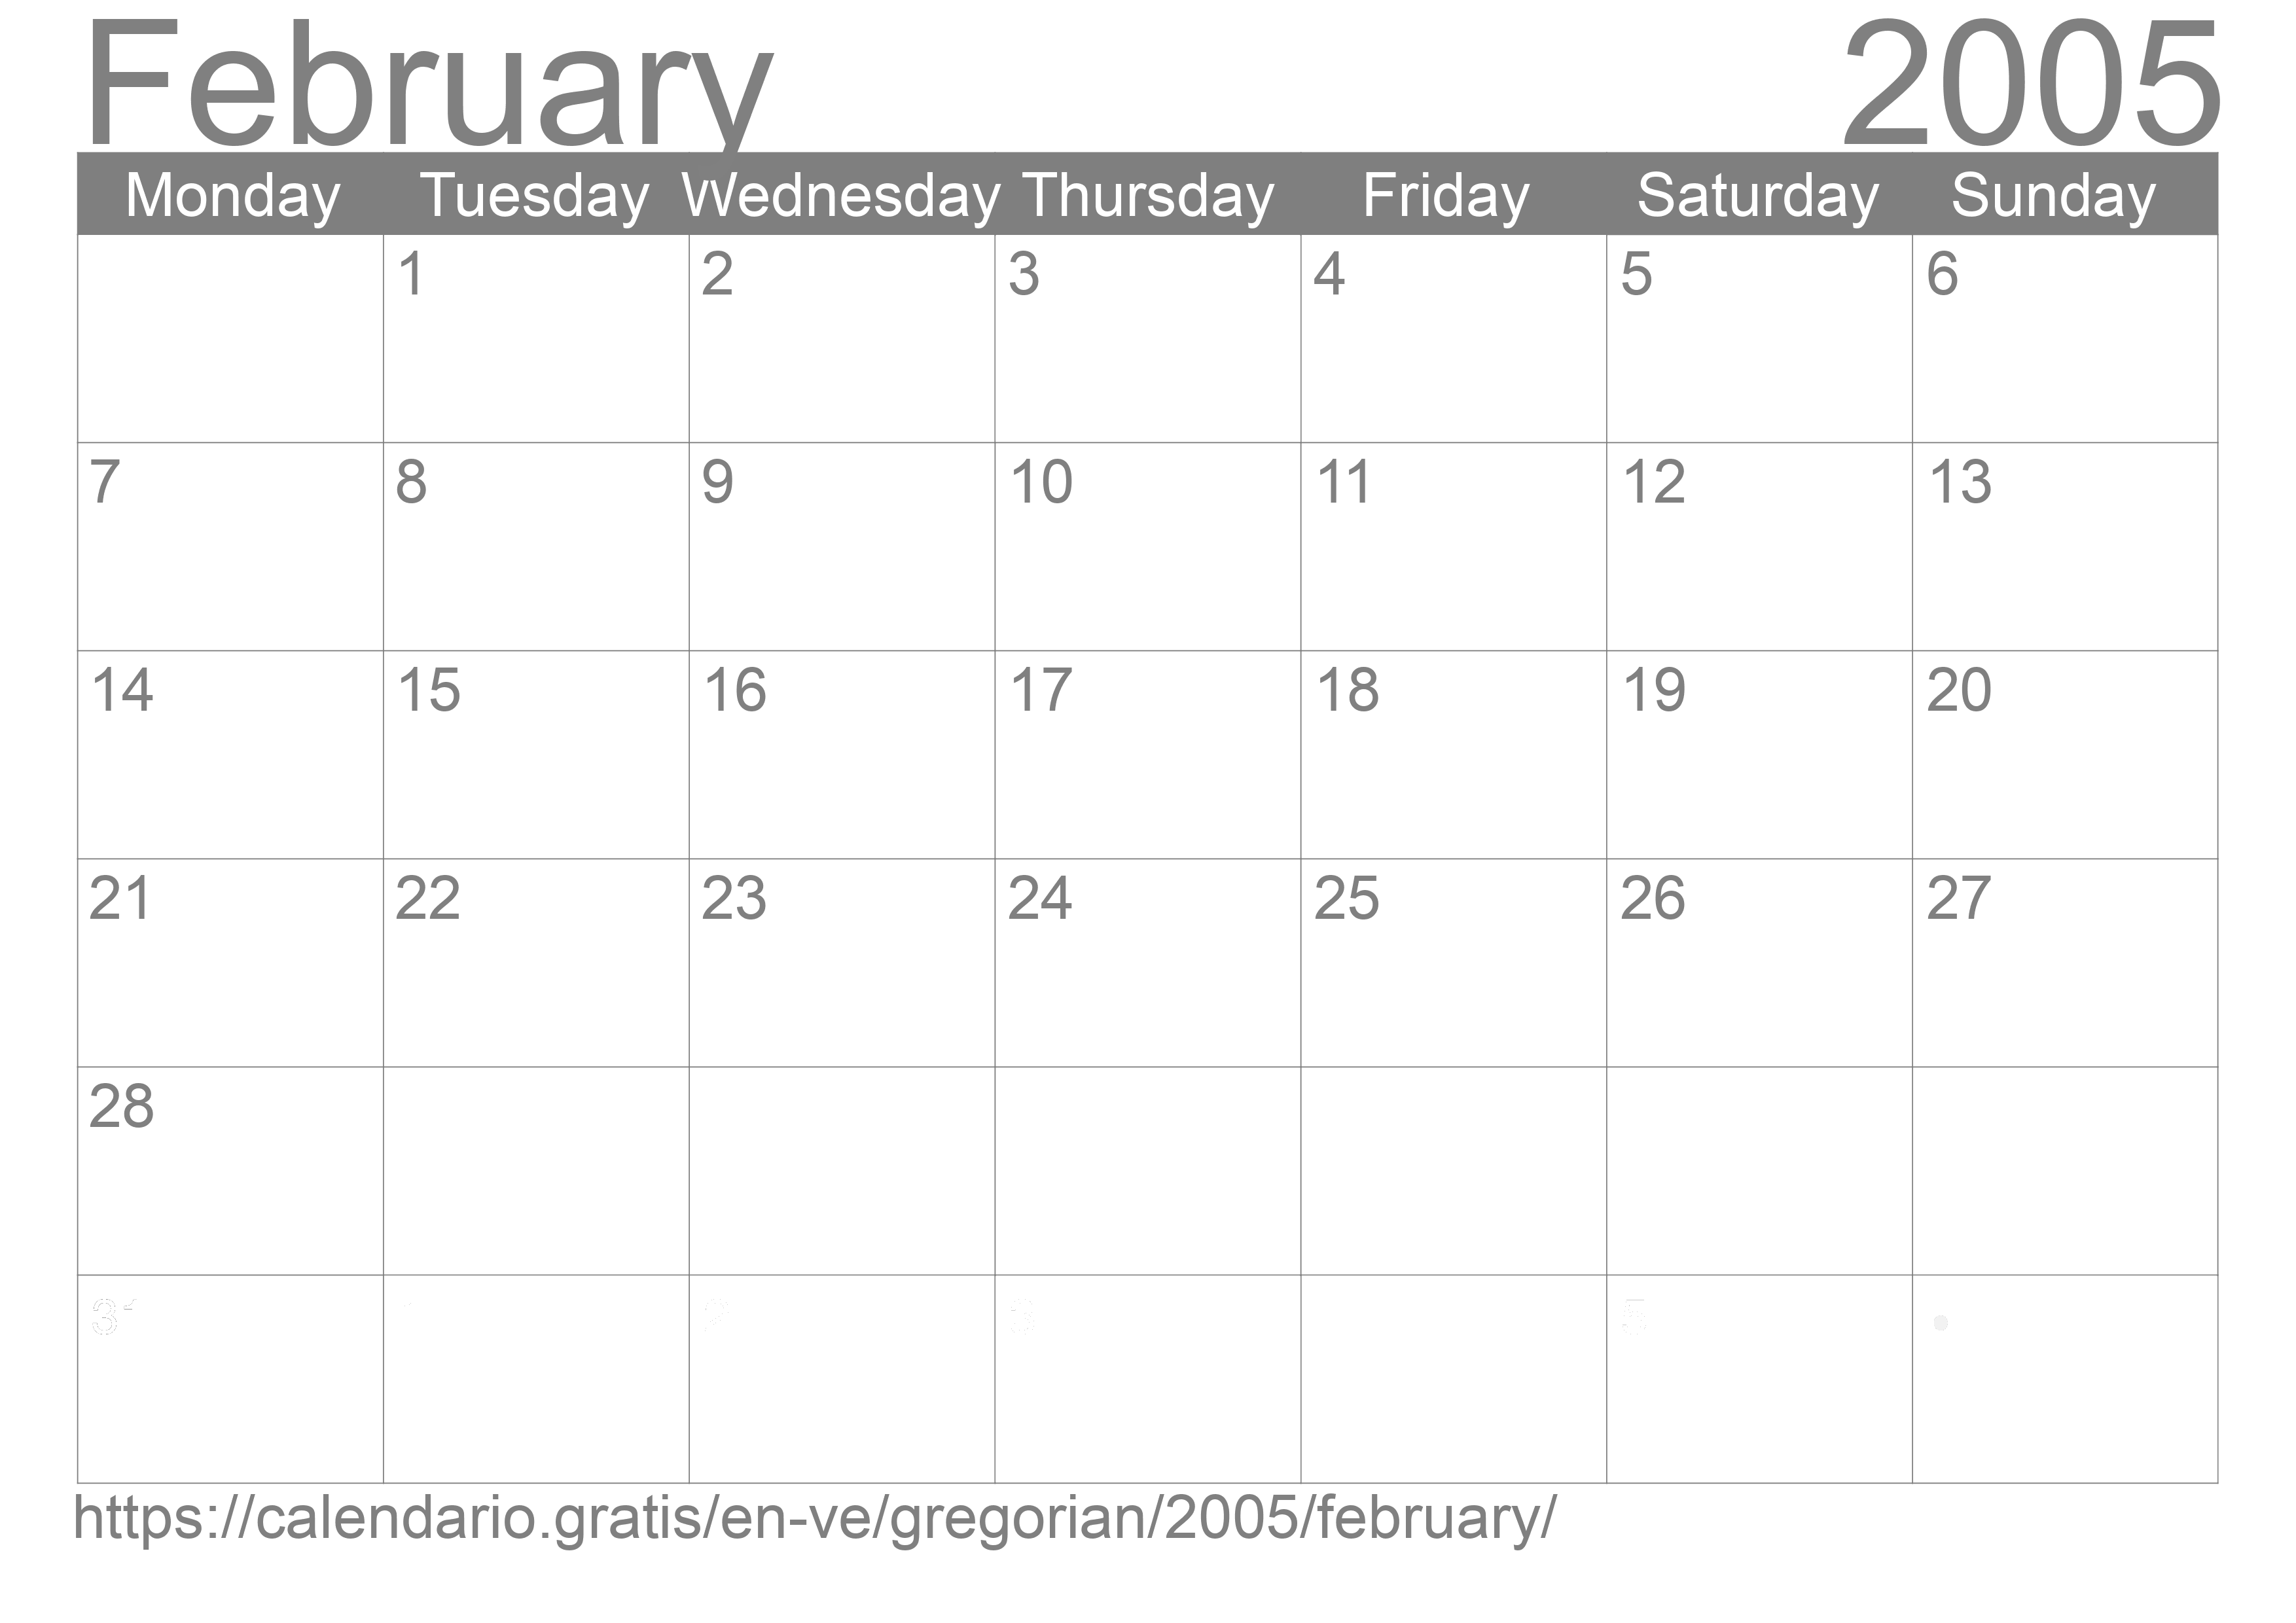 Calendar February 2005 to print